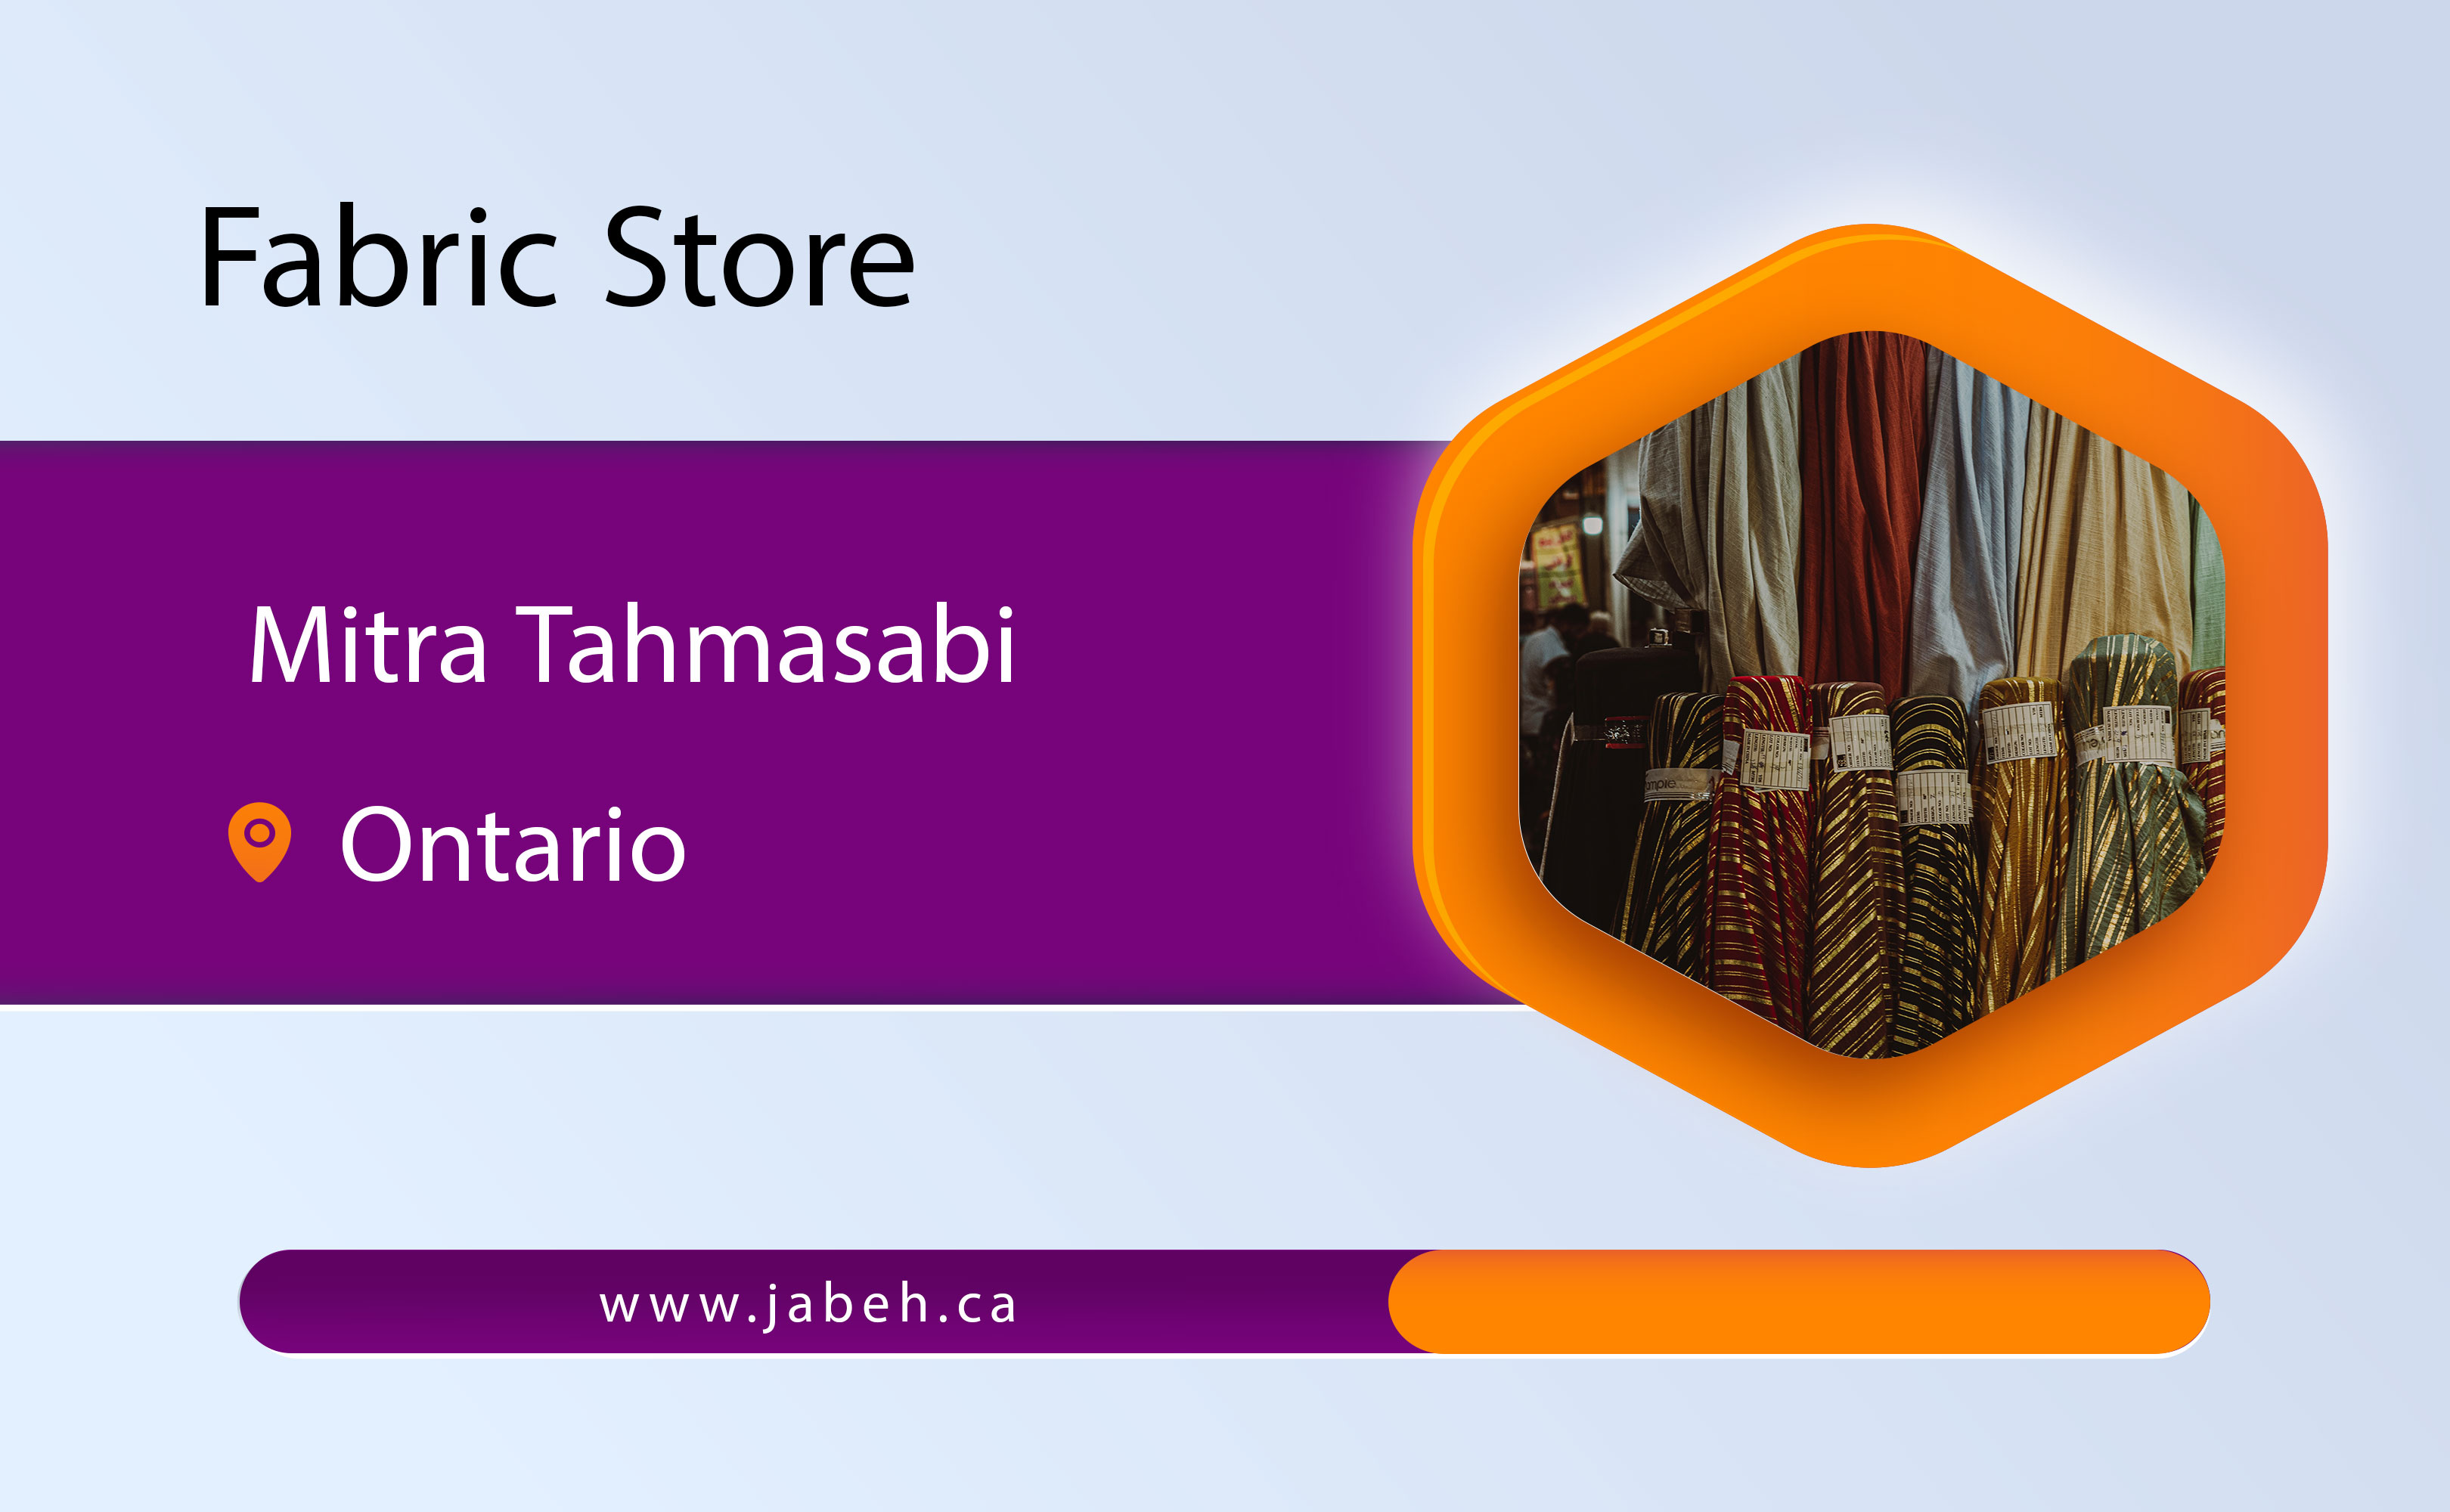 Mitra Tahmasabi fabric store in Ontario